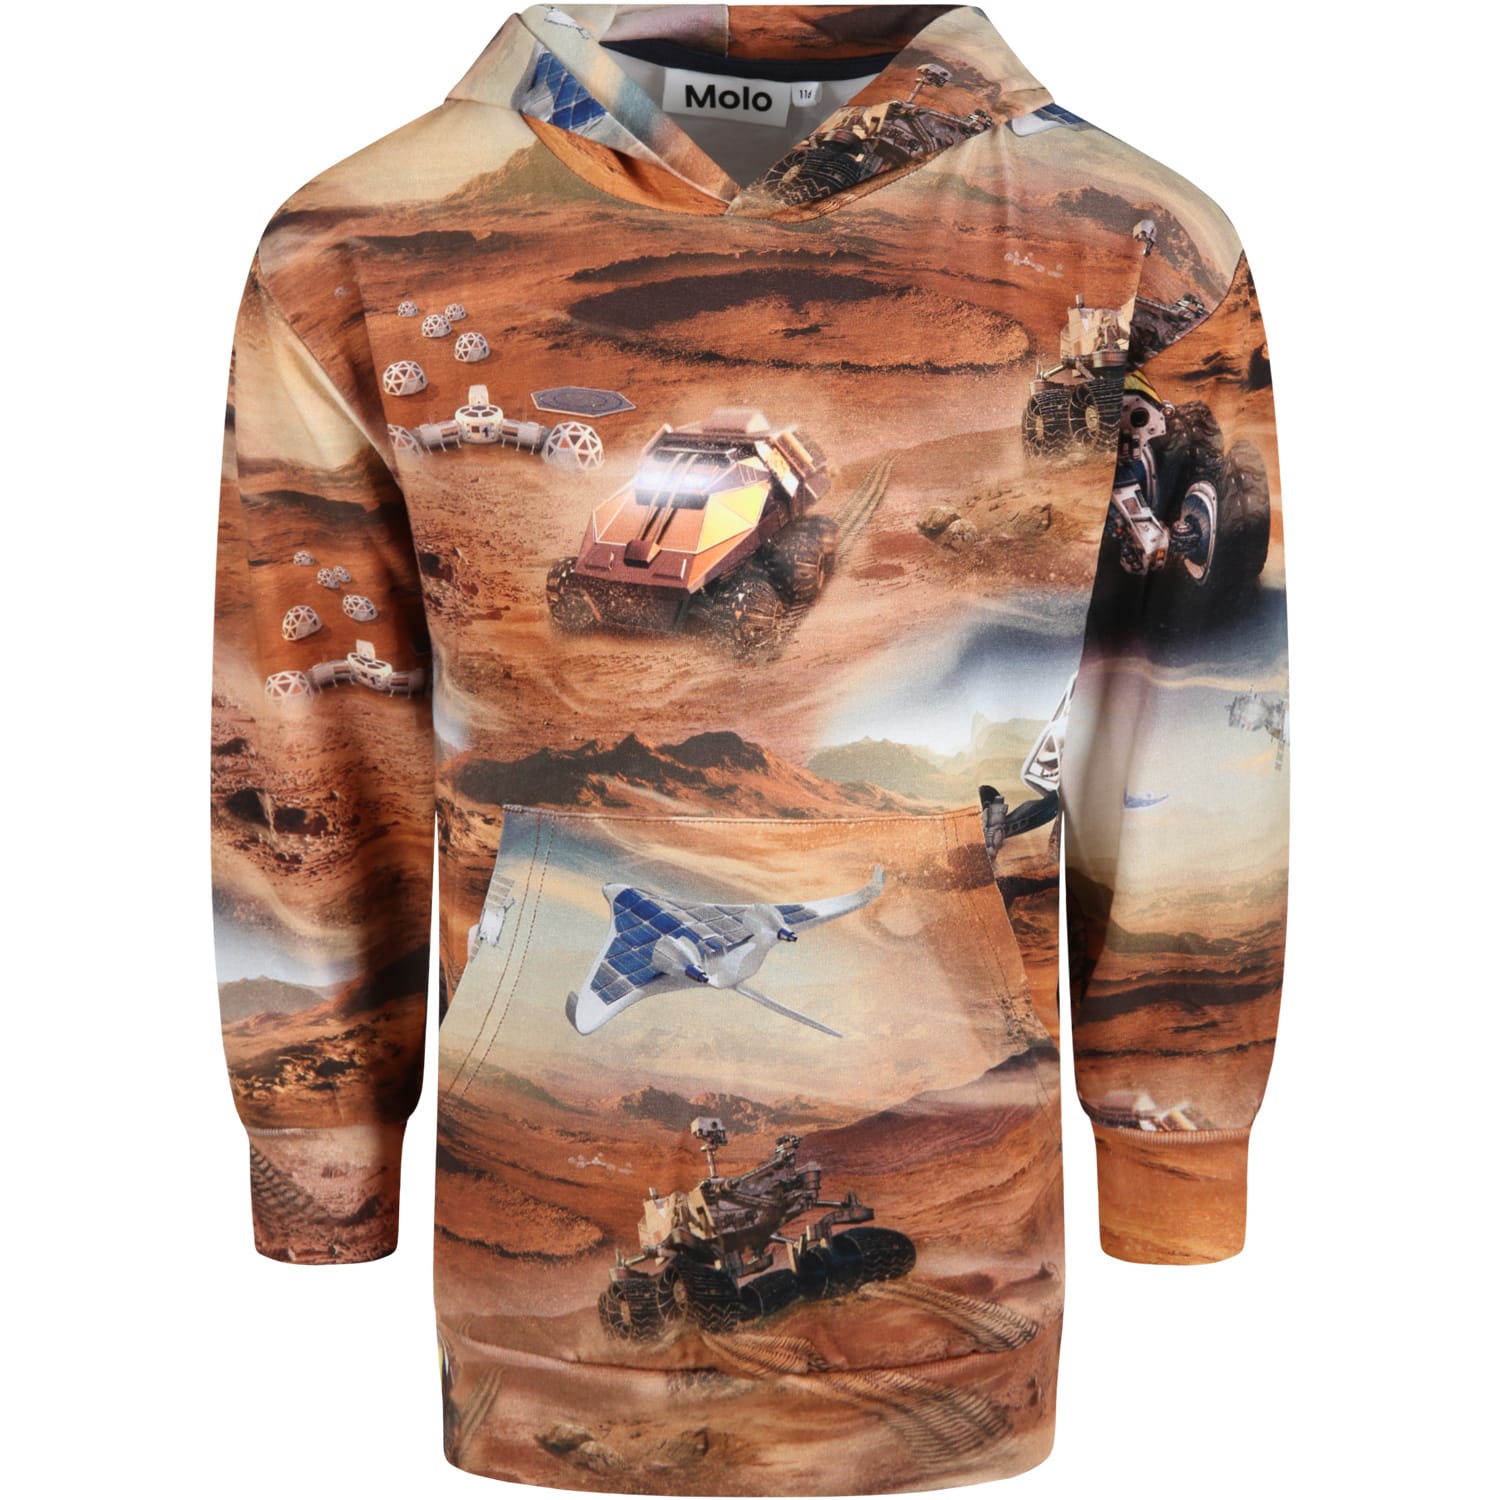 Molo Multicolor Sweatshirt For Boy With Space Rovers